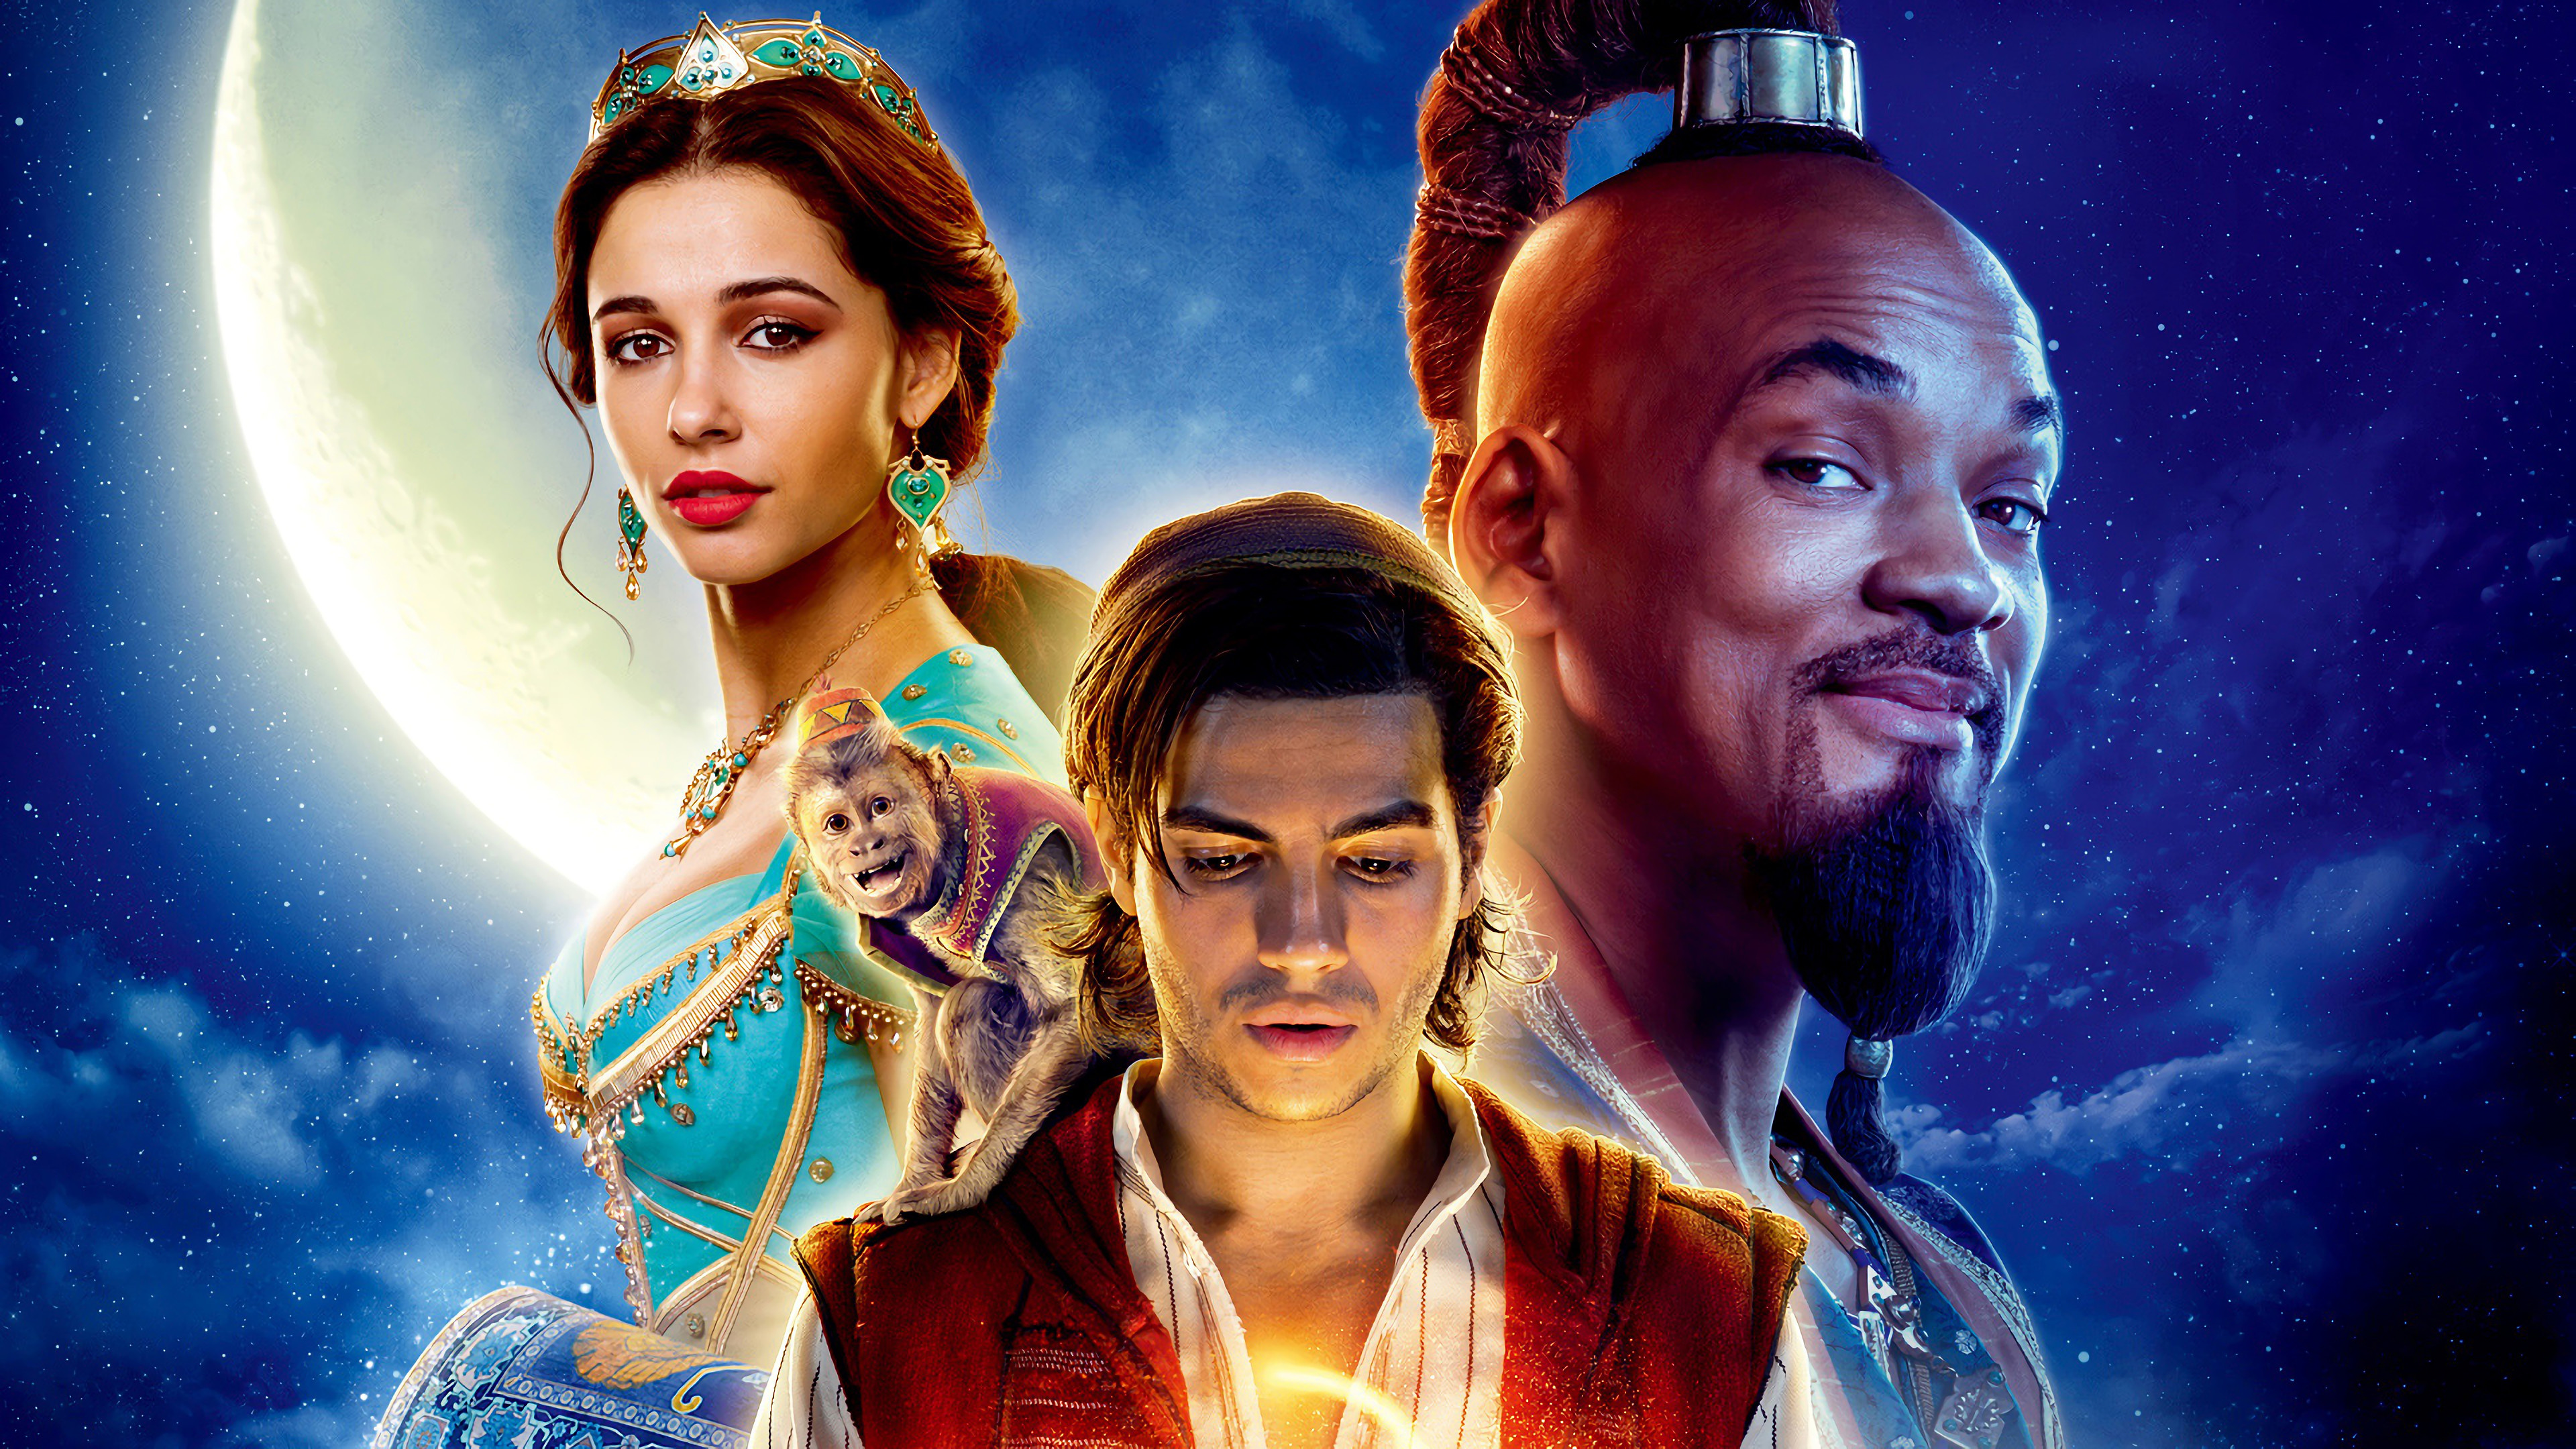 Aladdin and Jasmine, Magical love story, Genie's charm, 4K wallpaper, 3840x2160 4K Desktop